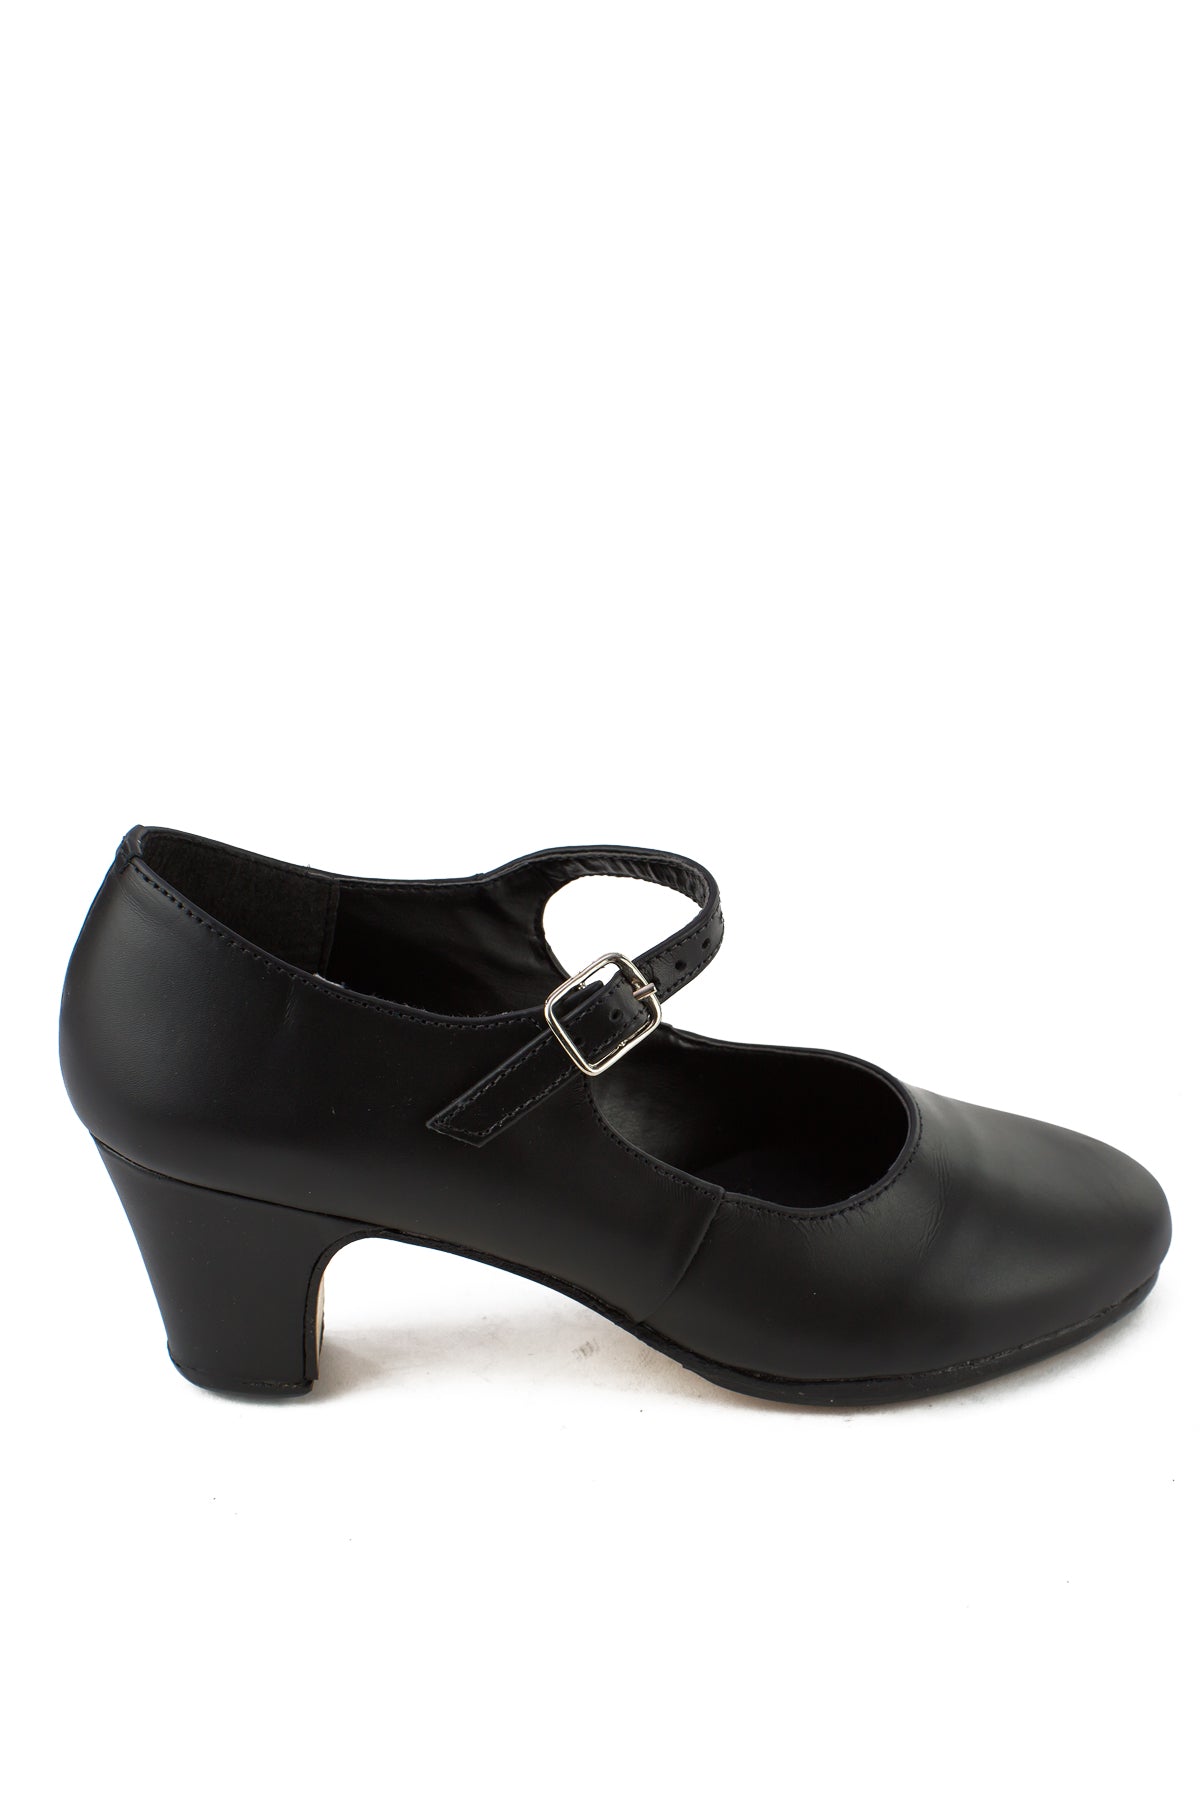 Marisol - FL12 - Flamenco Shoe